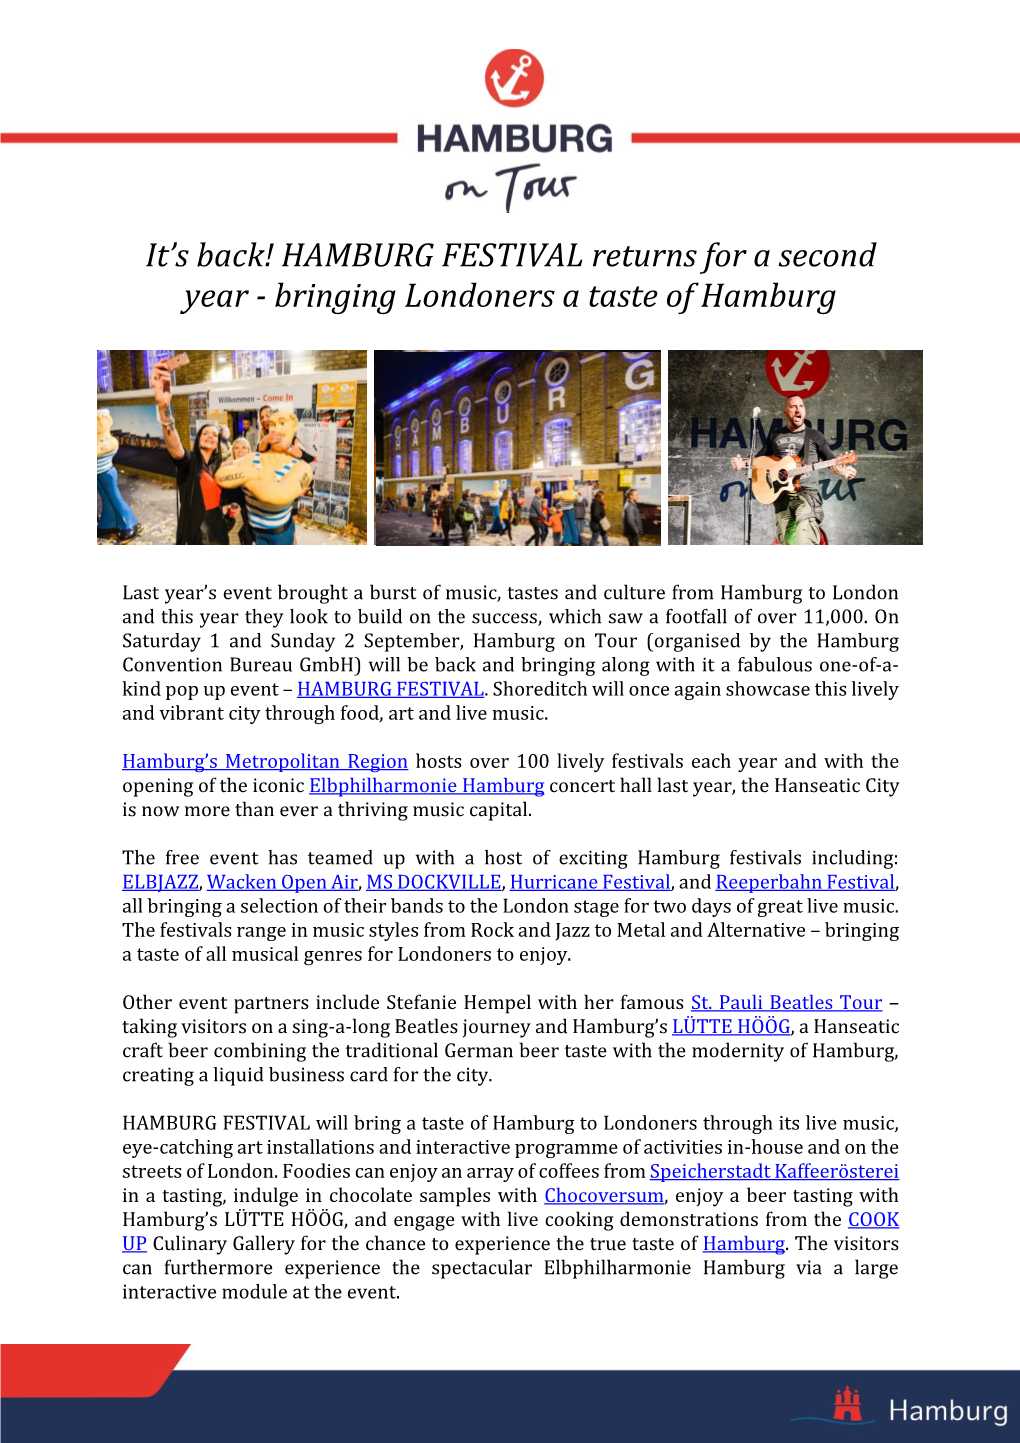 HAMBURG FESTIVAL Returns for a Second Year - Bringing Londoners a Taste of Hamburg